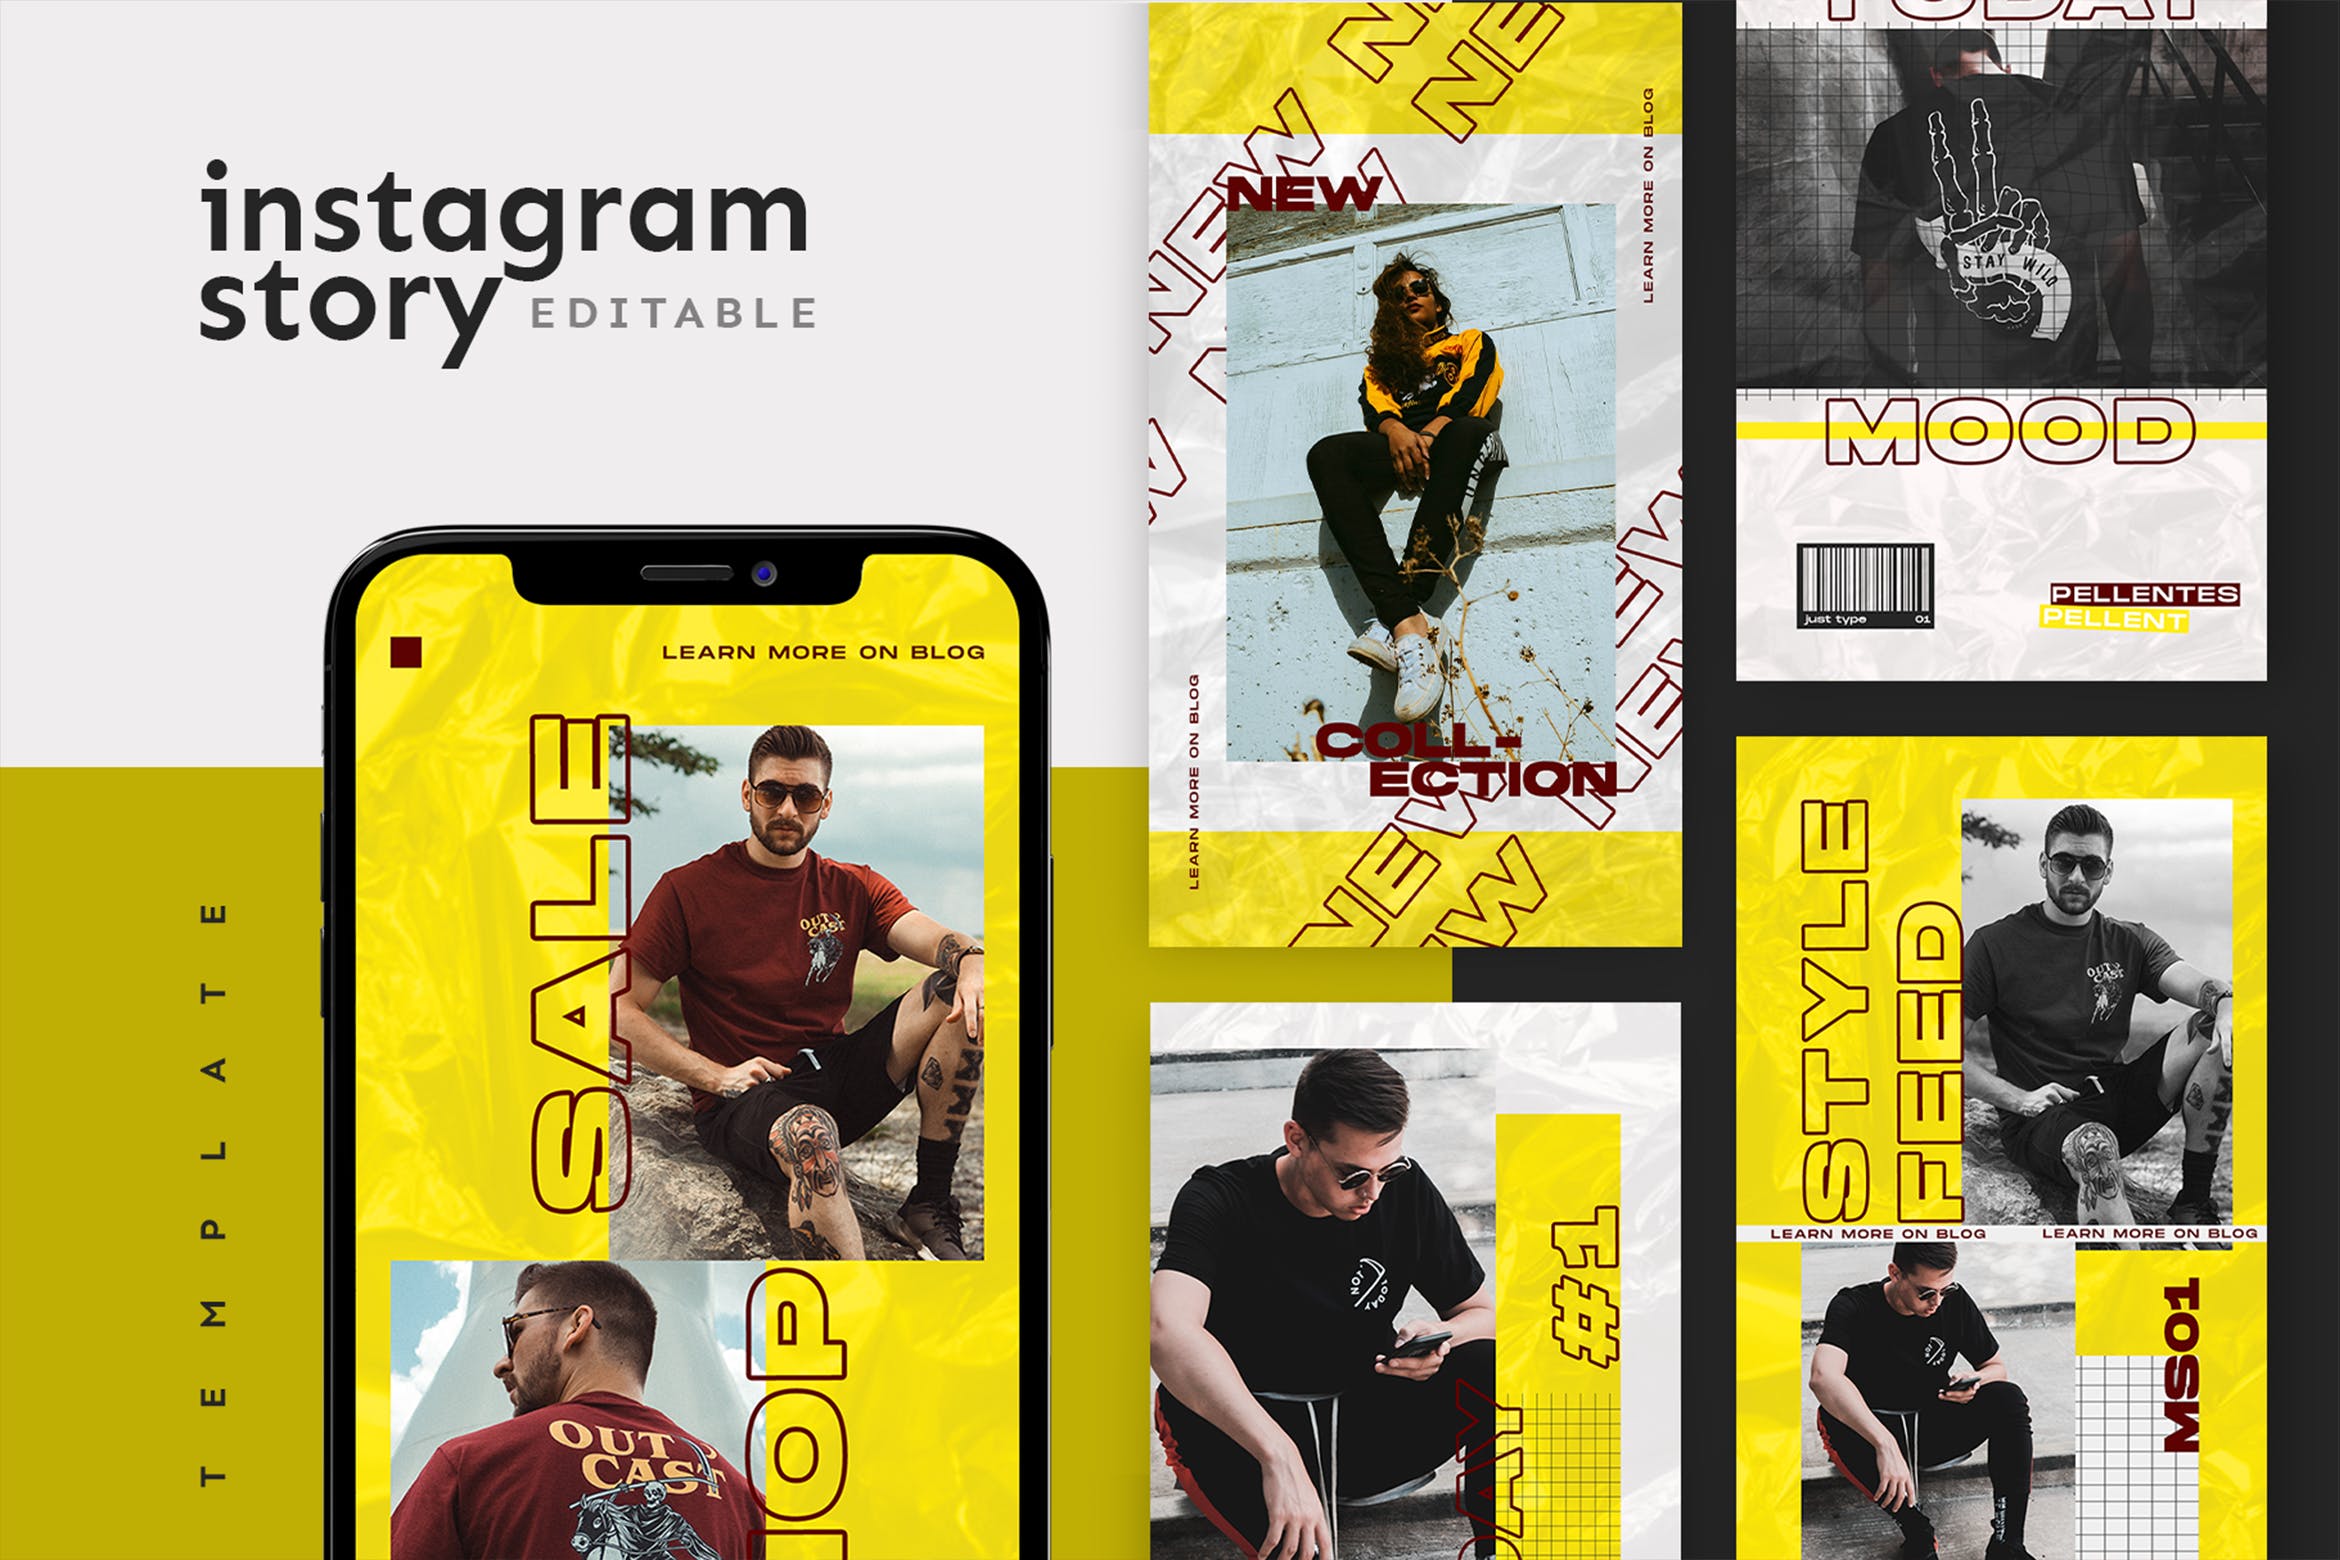 Instagram社交平台品牌故事广告设计模板16图库精选 Instagram Story Template插图